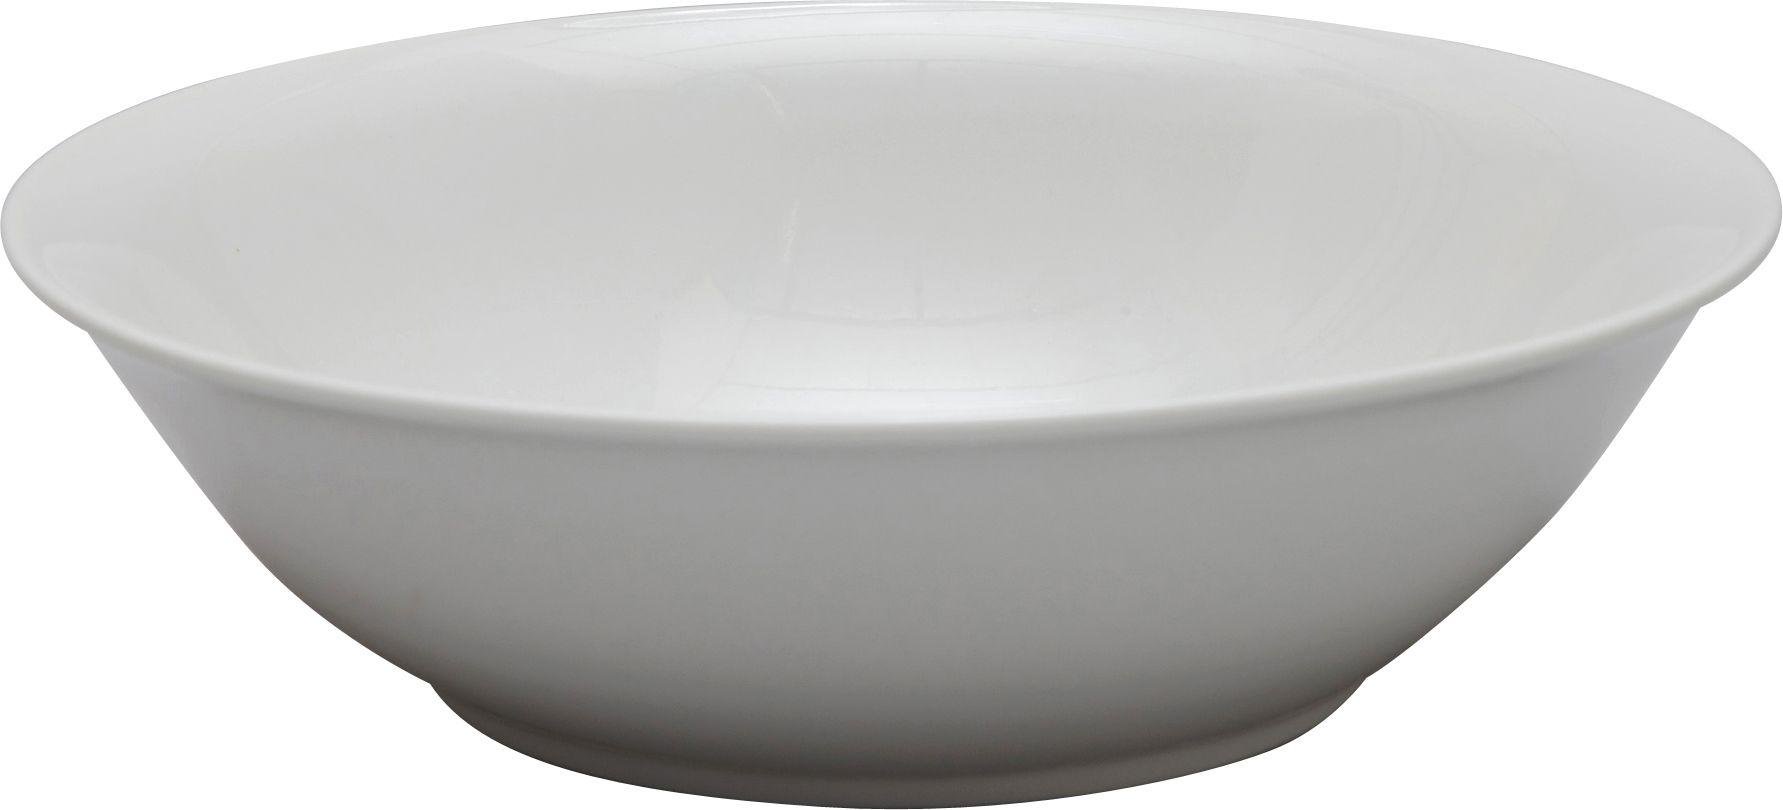 Argos Home Set of 4 Porcelain Pasta Bowls - White